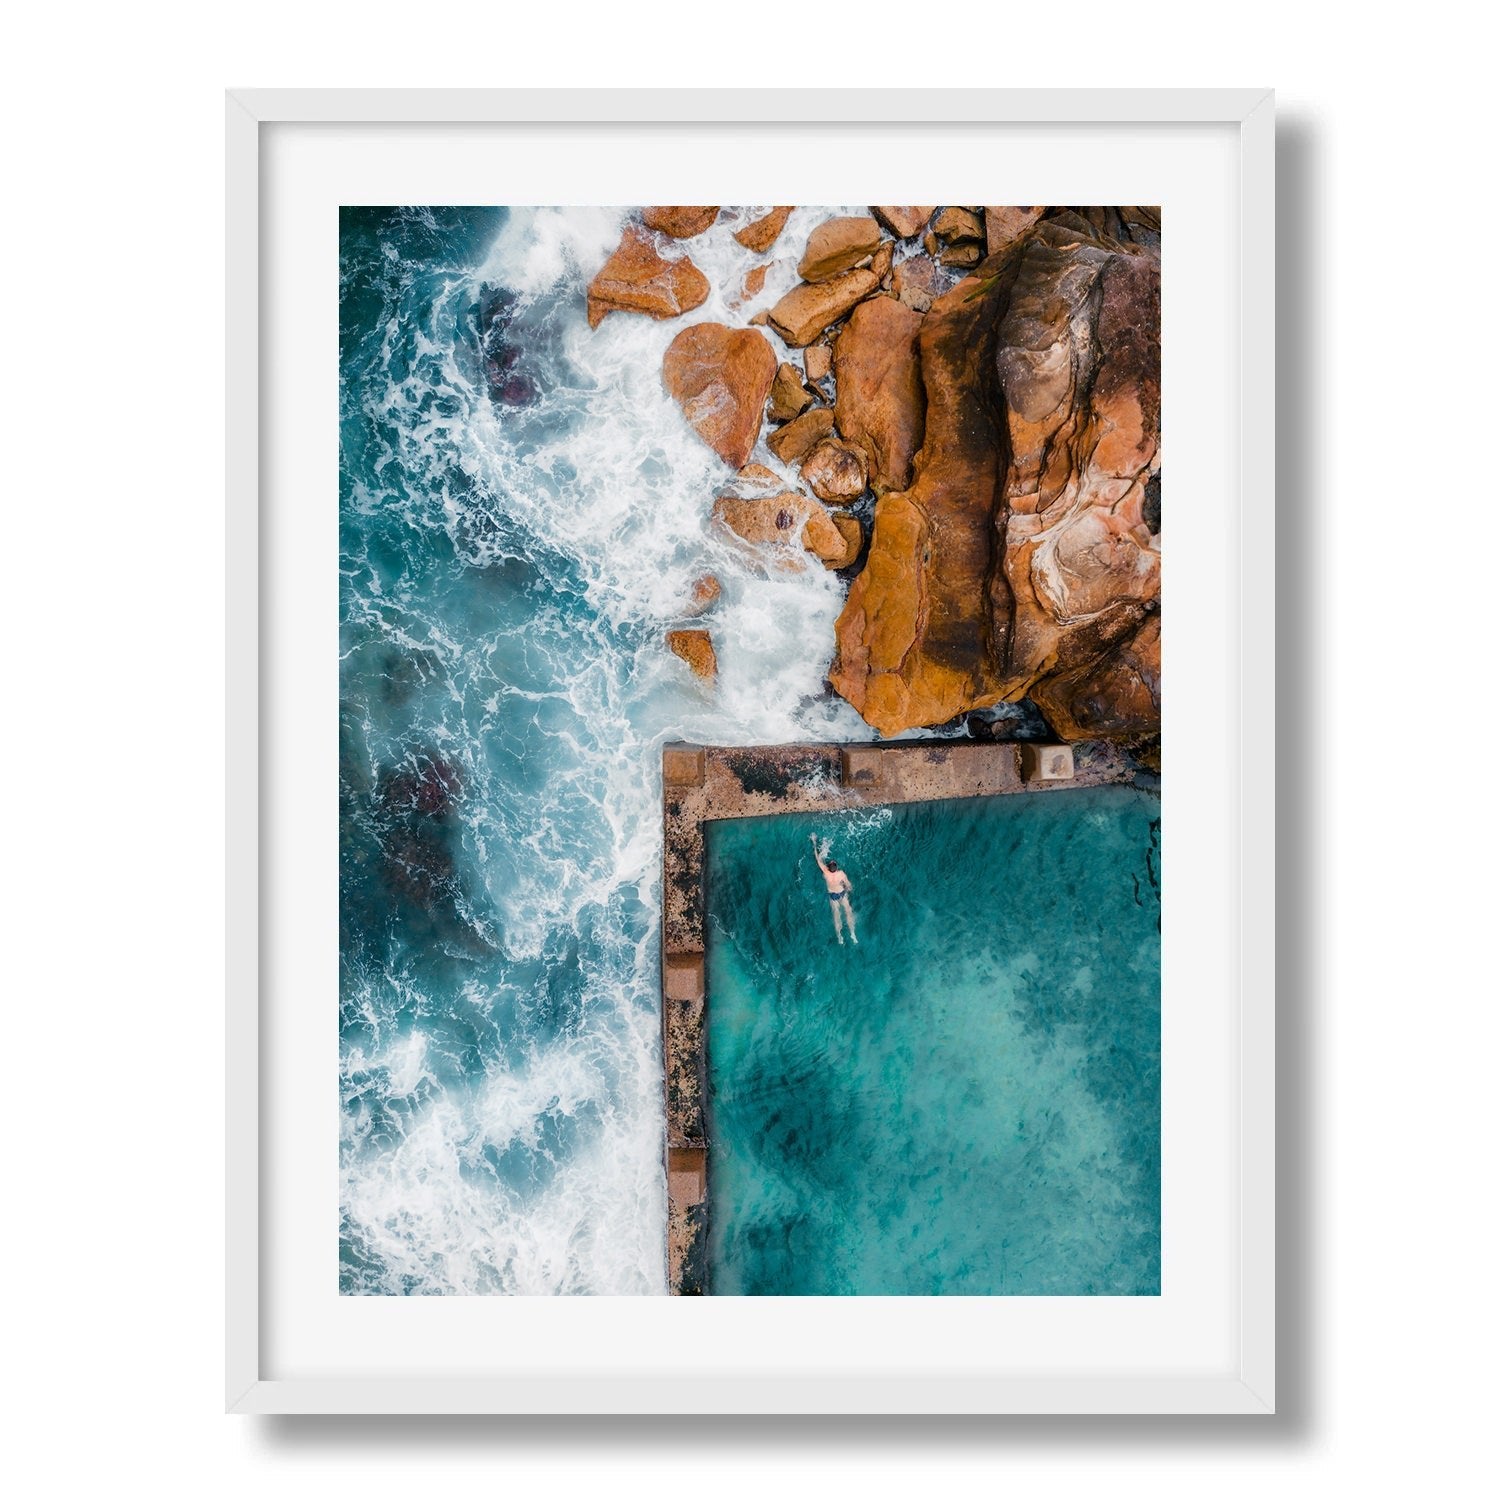 Coogee Beach Rock Pool - Peter Yan Studio